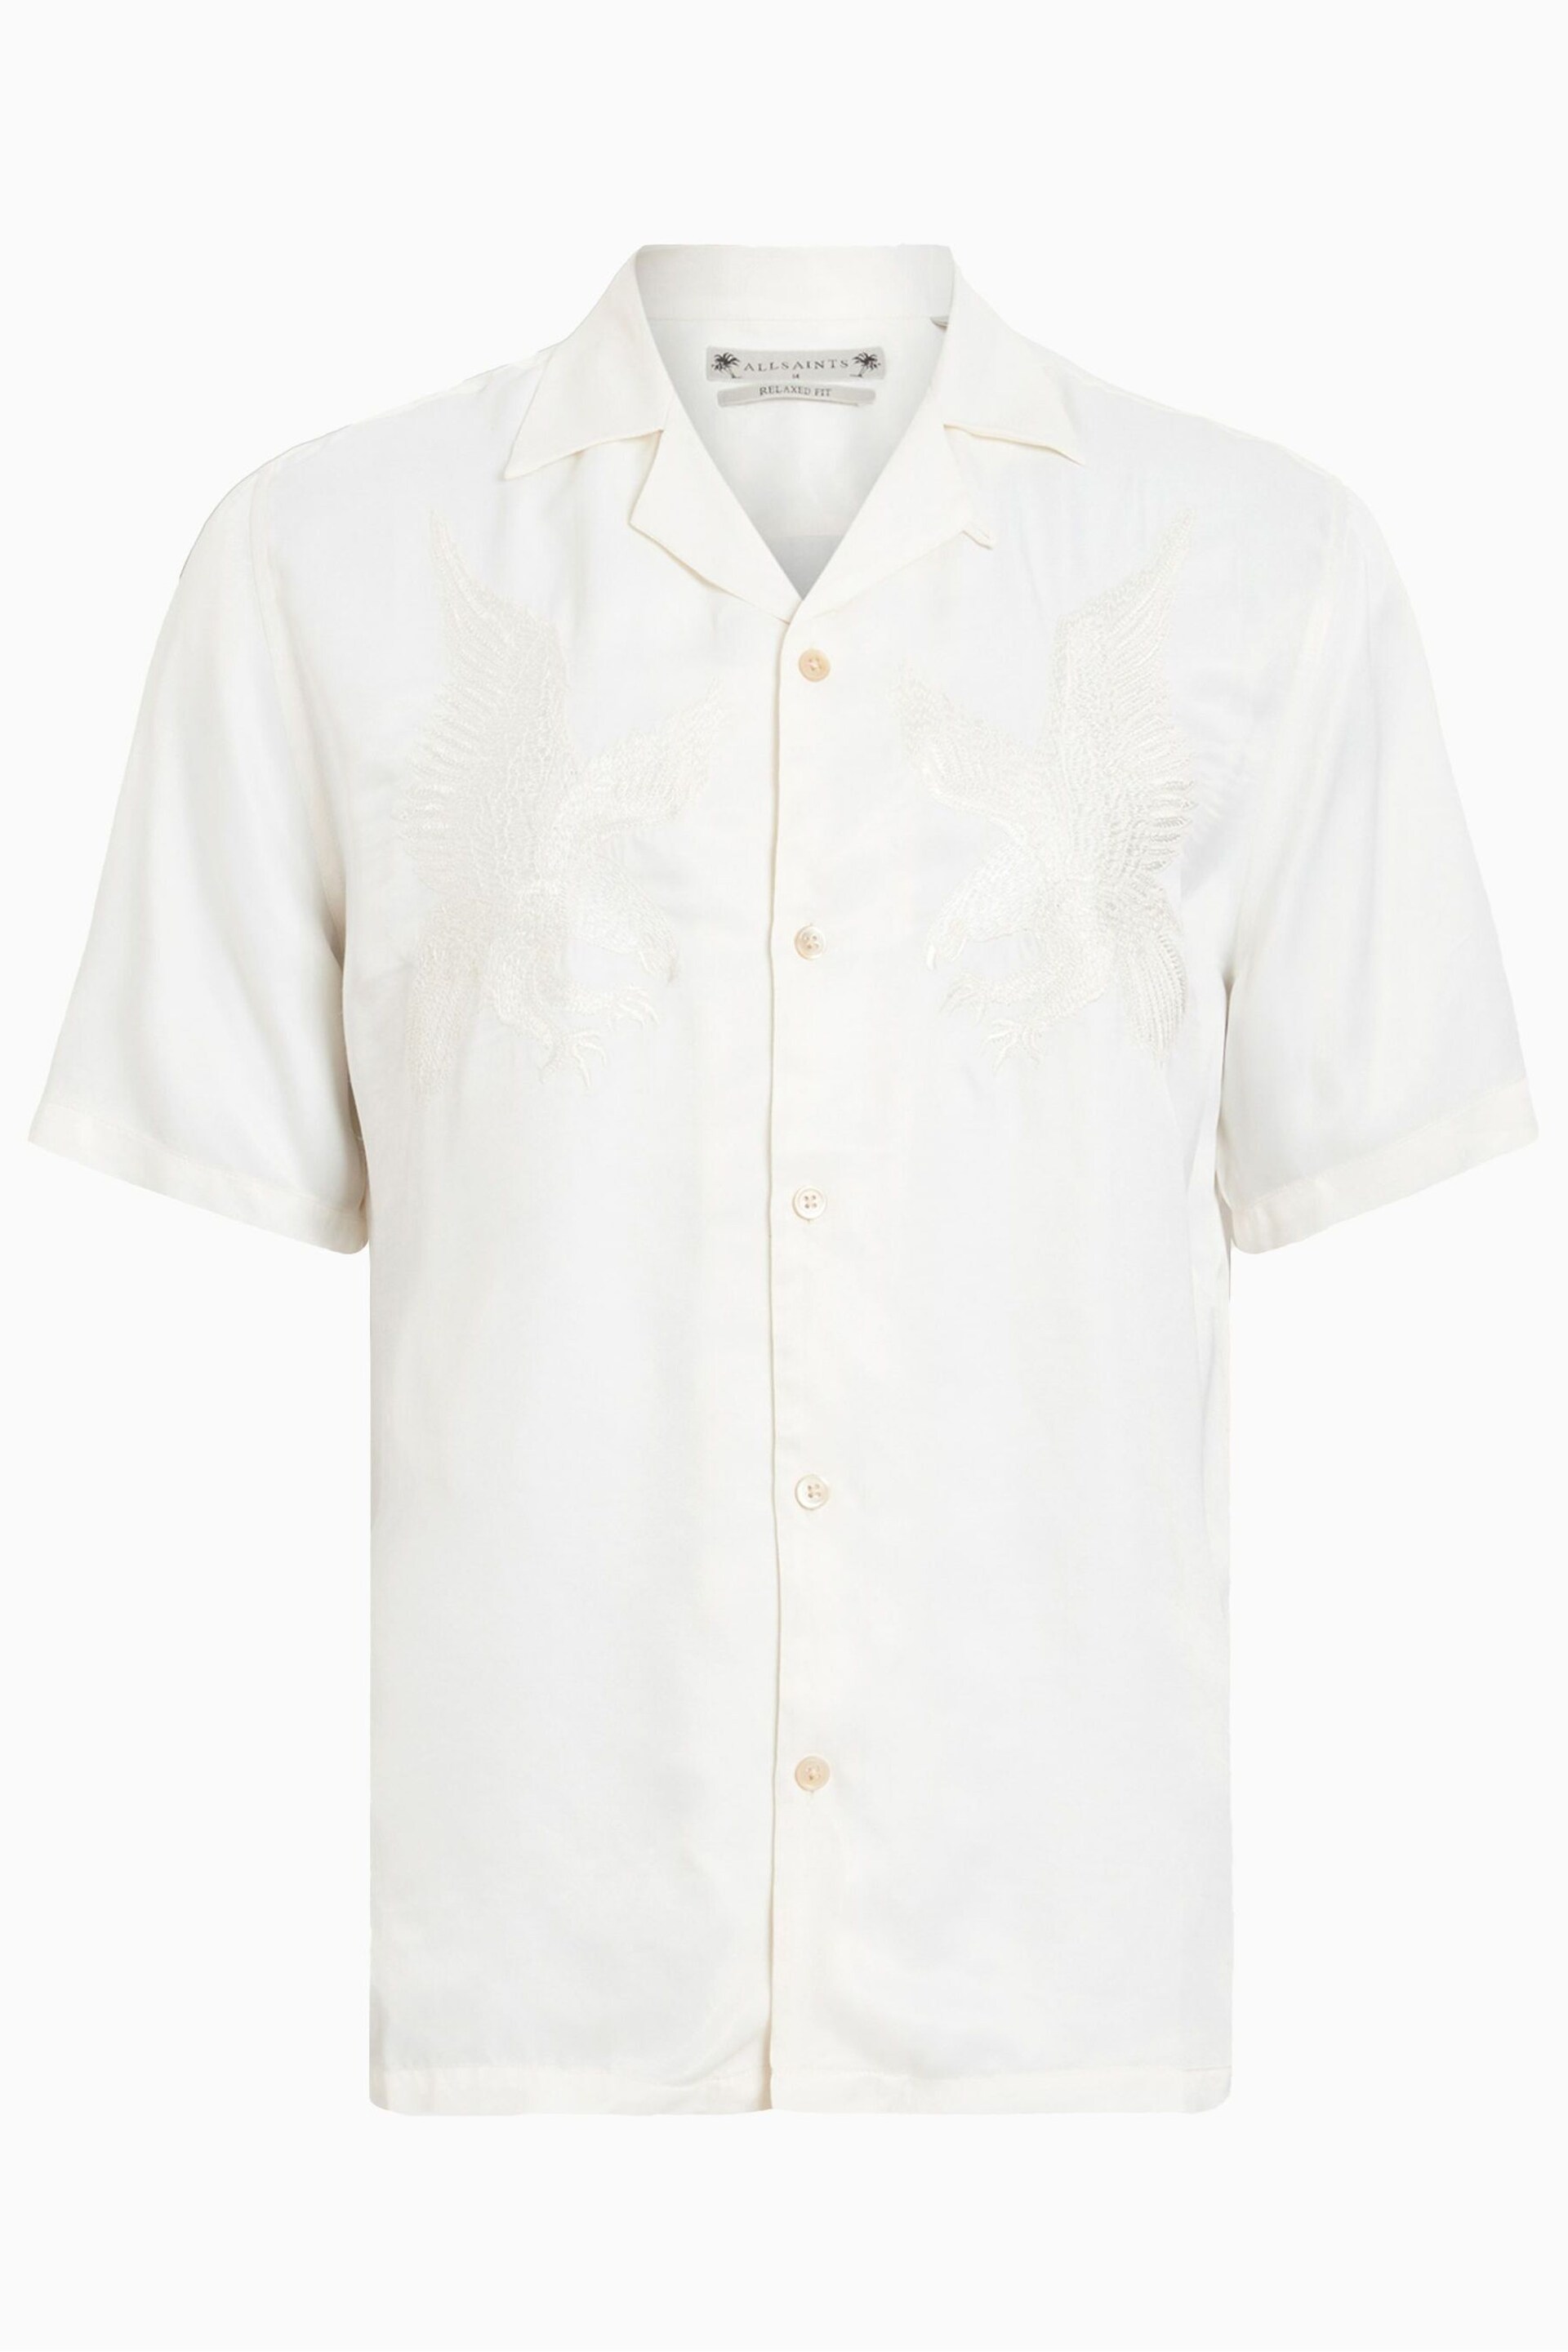 AllSaints White Aquila Short Sleeve Shirt - Image 7 of 7